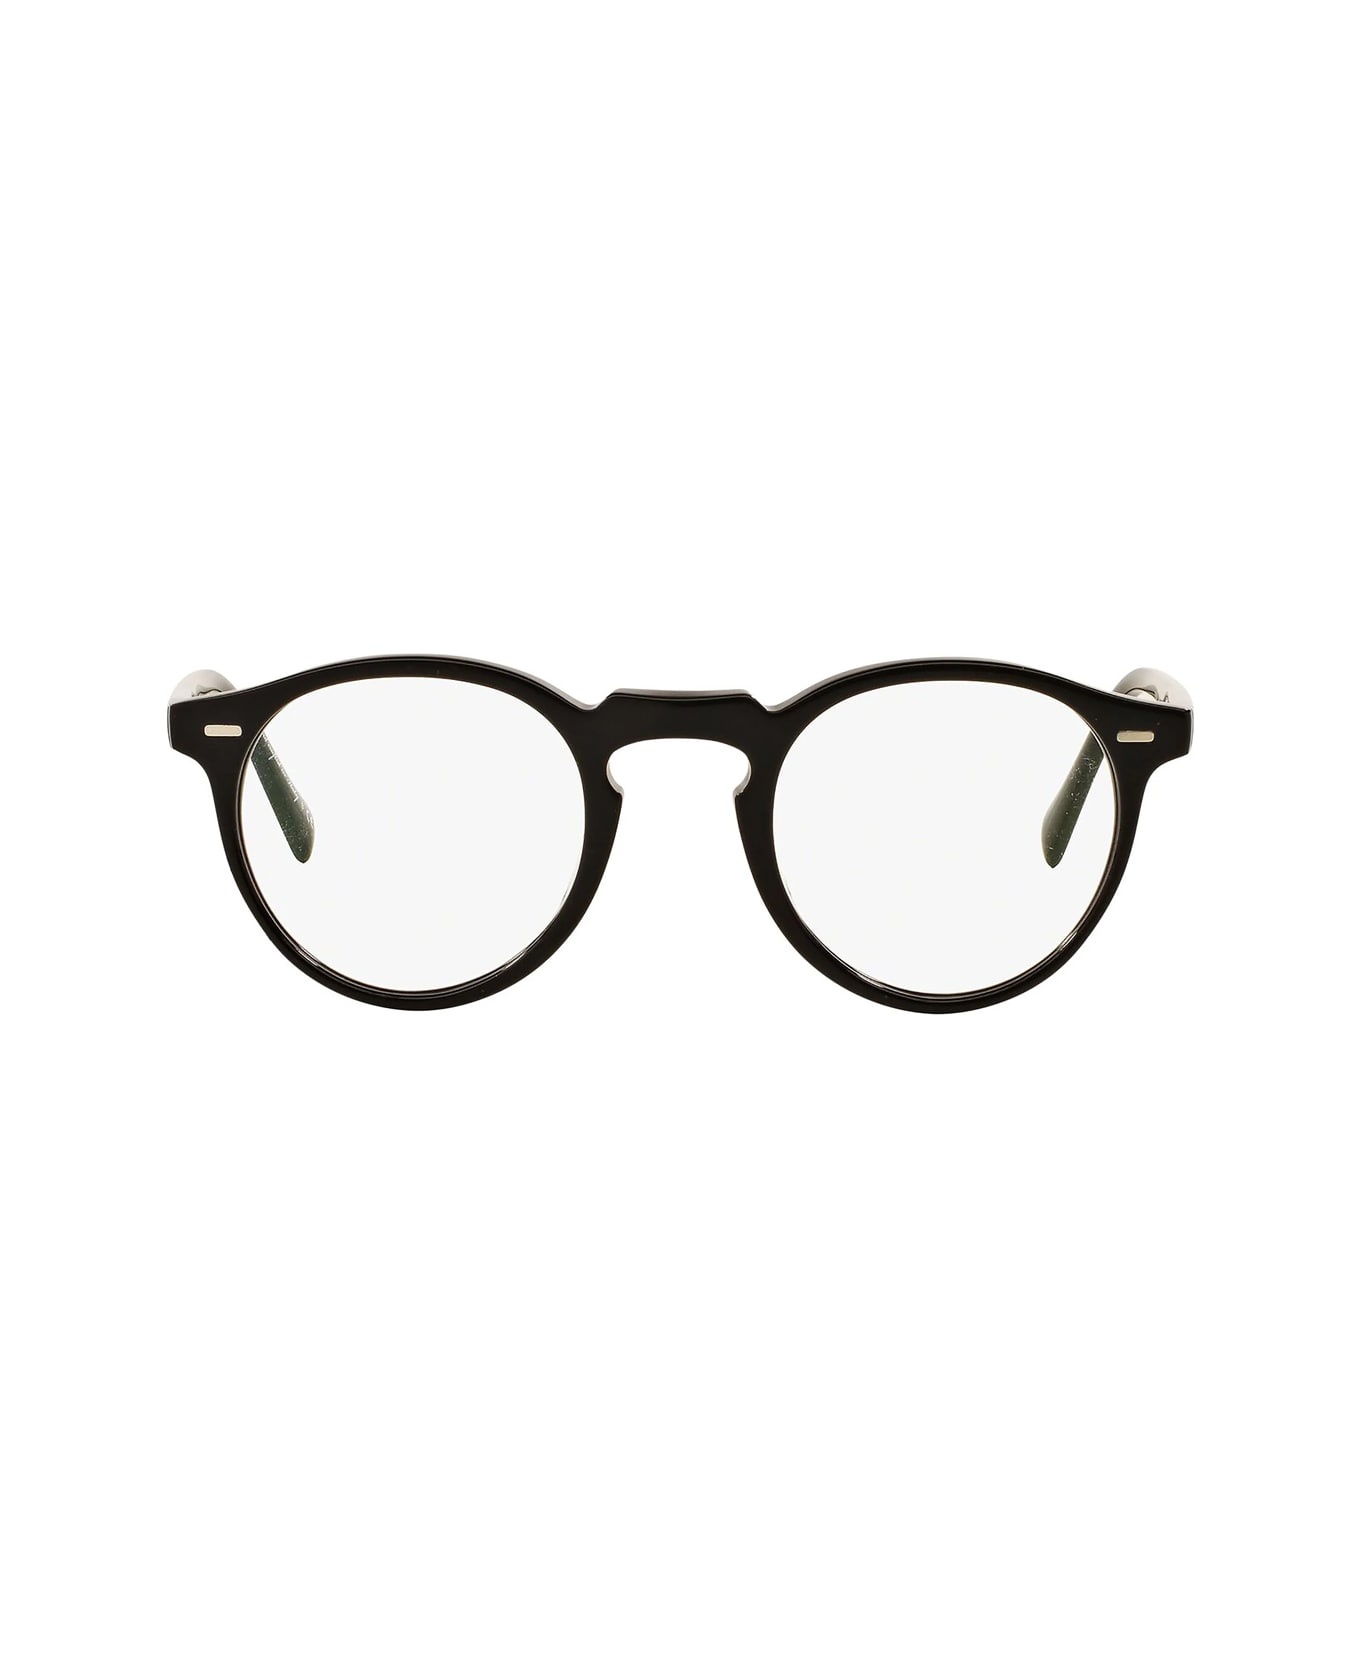 Oliver Peoples Ov5186 - Gregory Peck 1005 Glasses - Nero